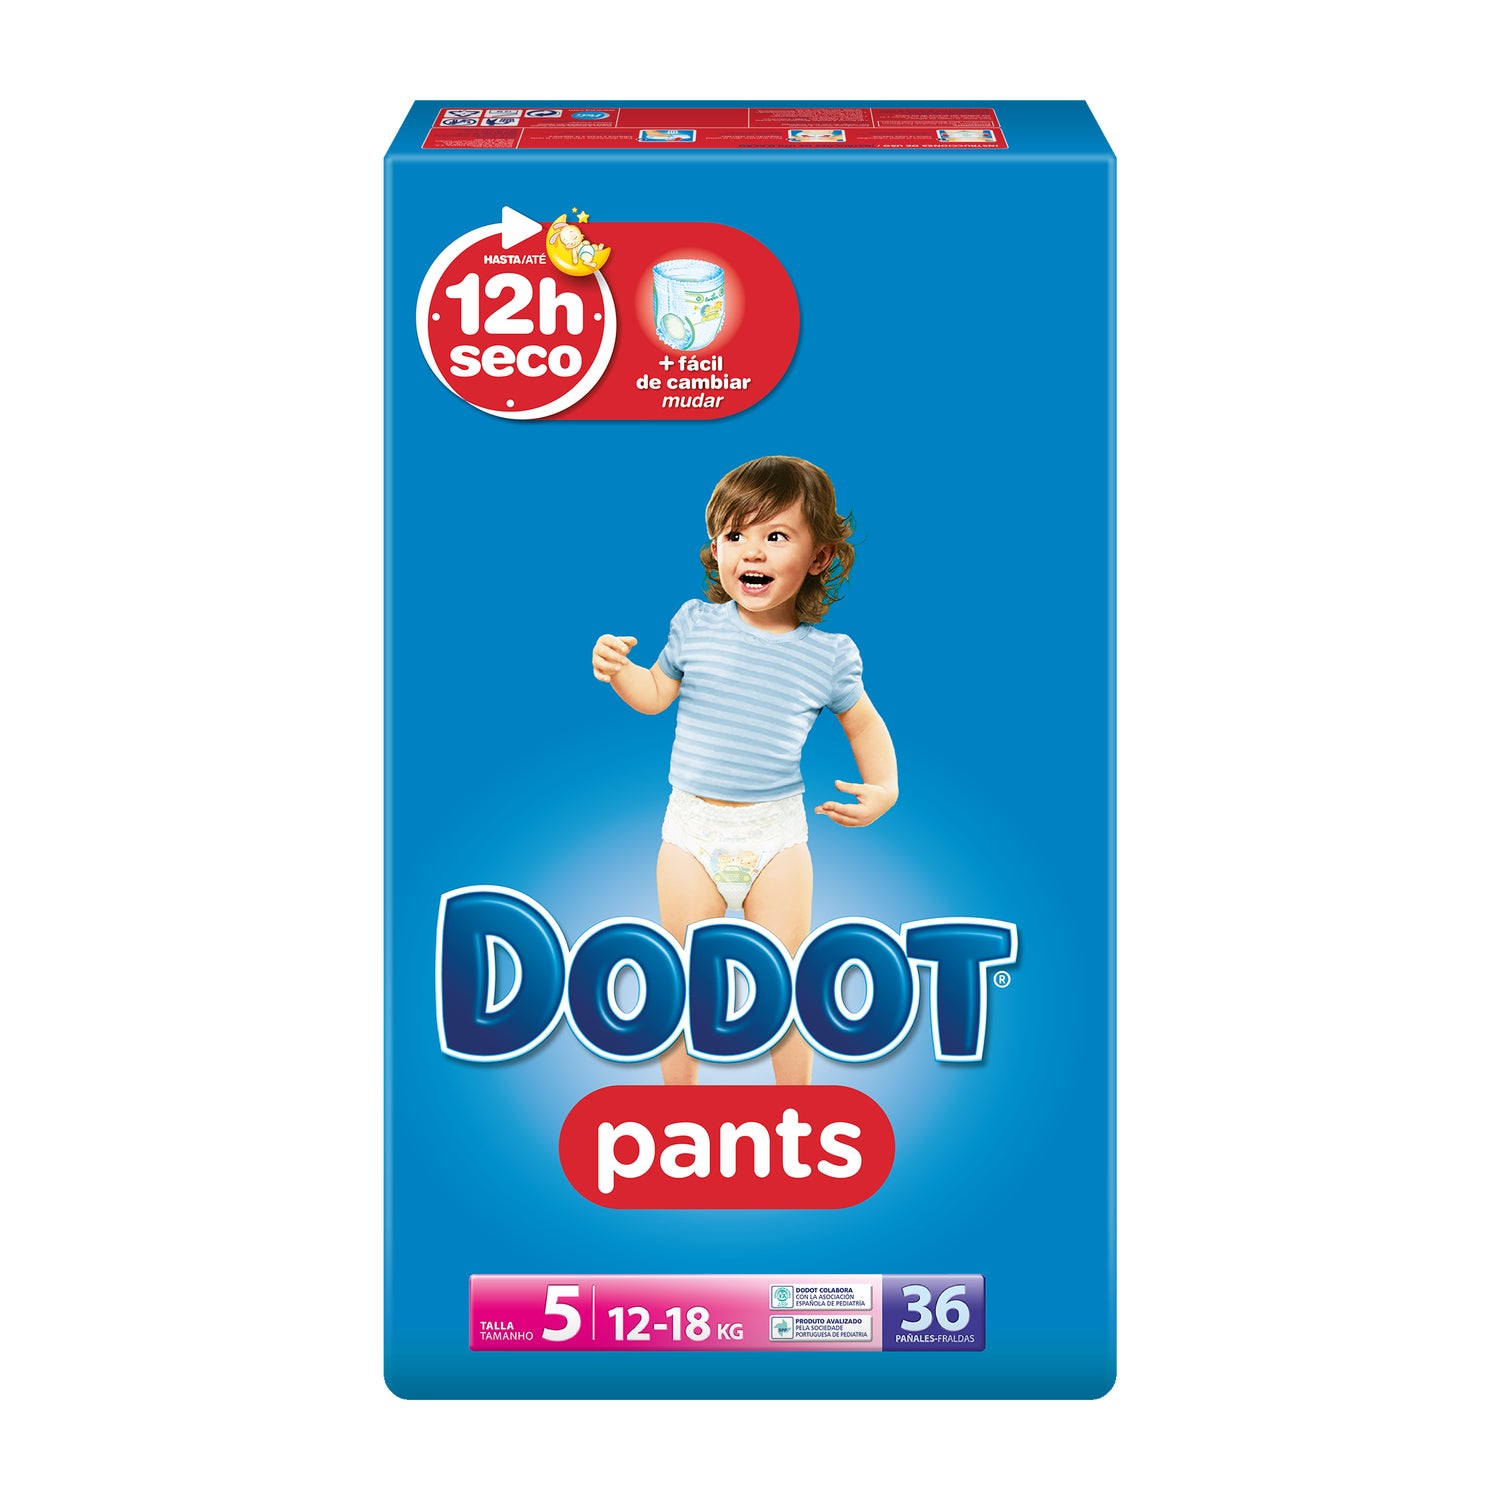 Dodot Size 6 27 Units Diaper Pants Blue